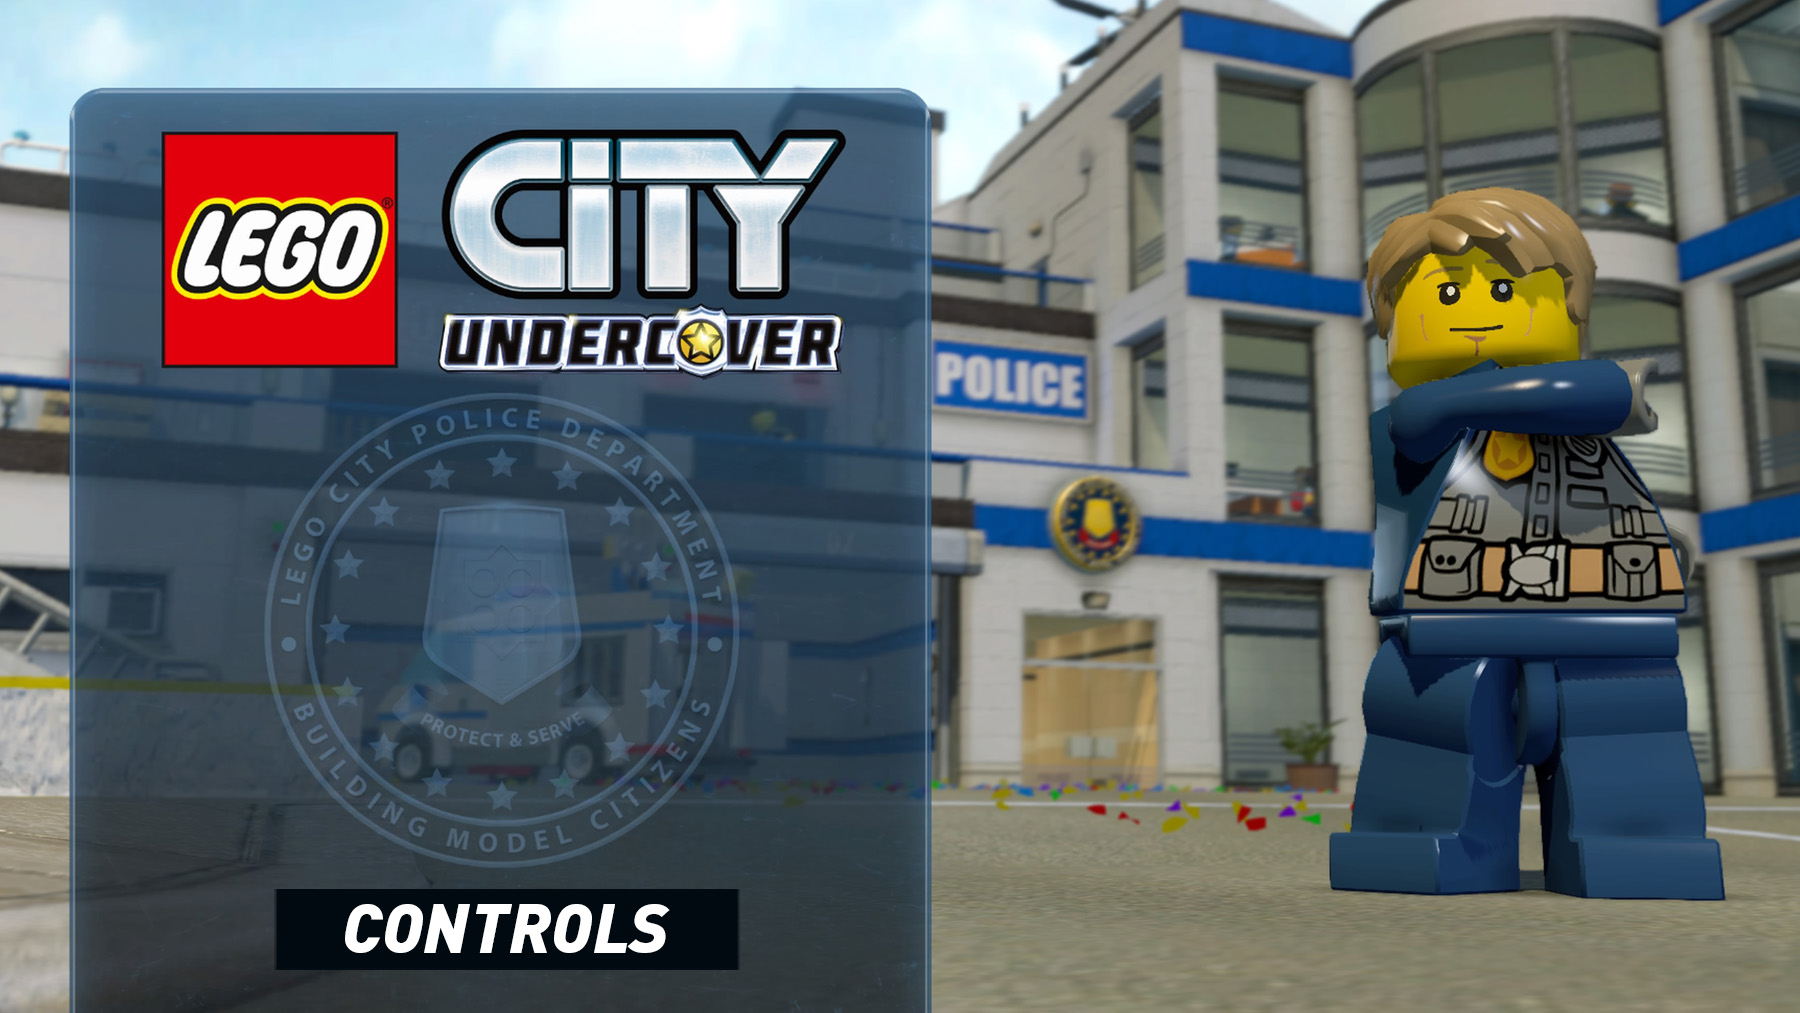 LEGO City Undercover – Controls